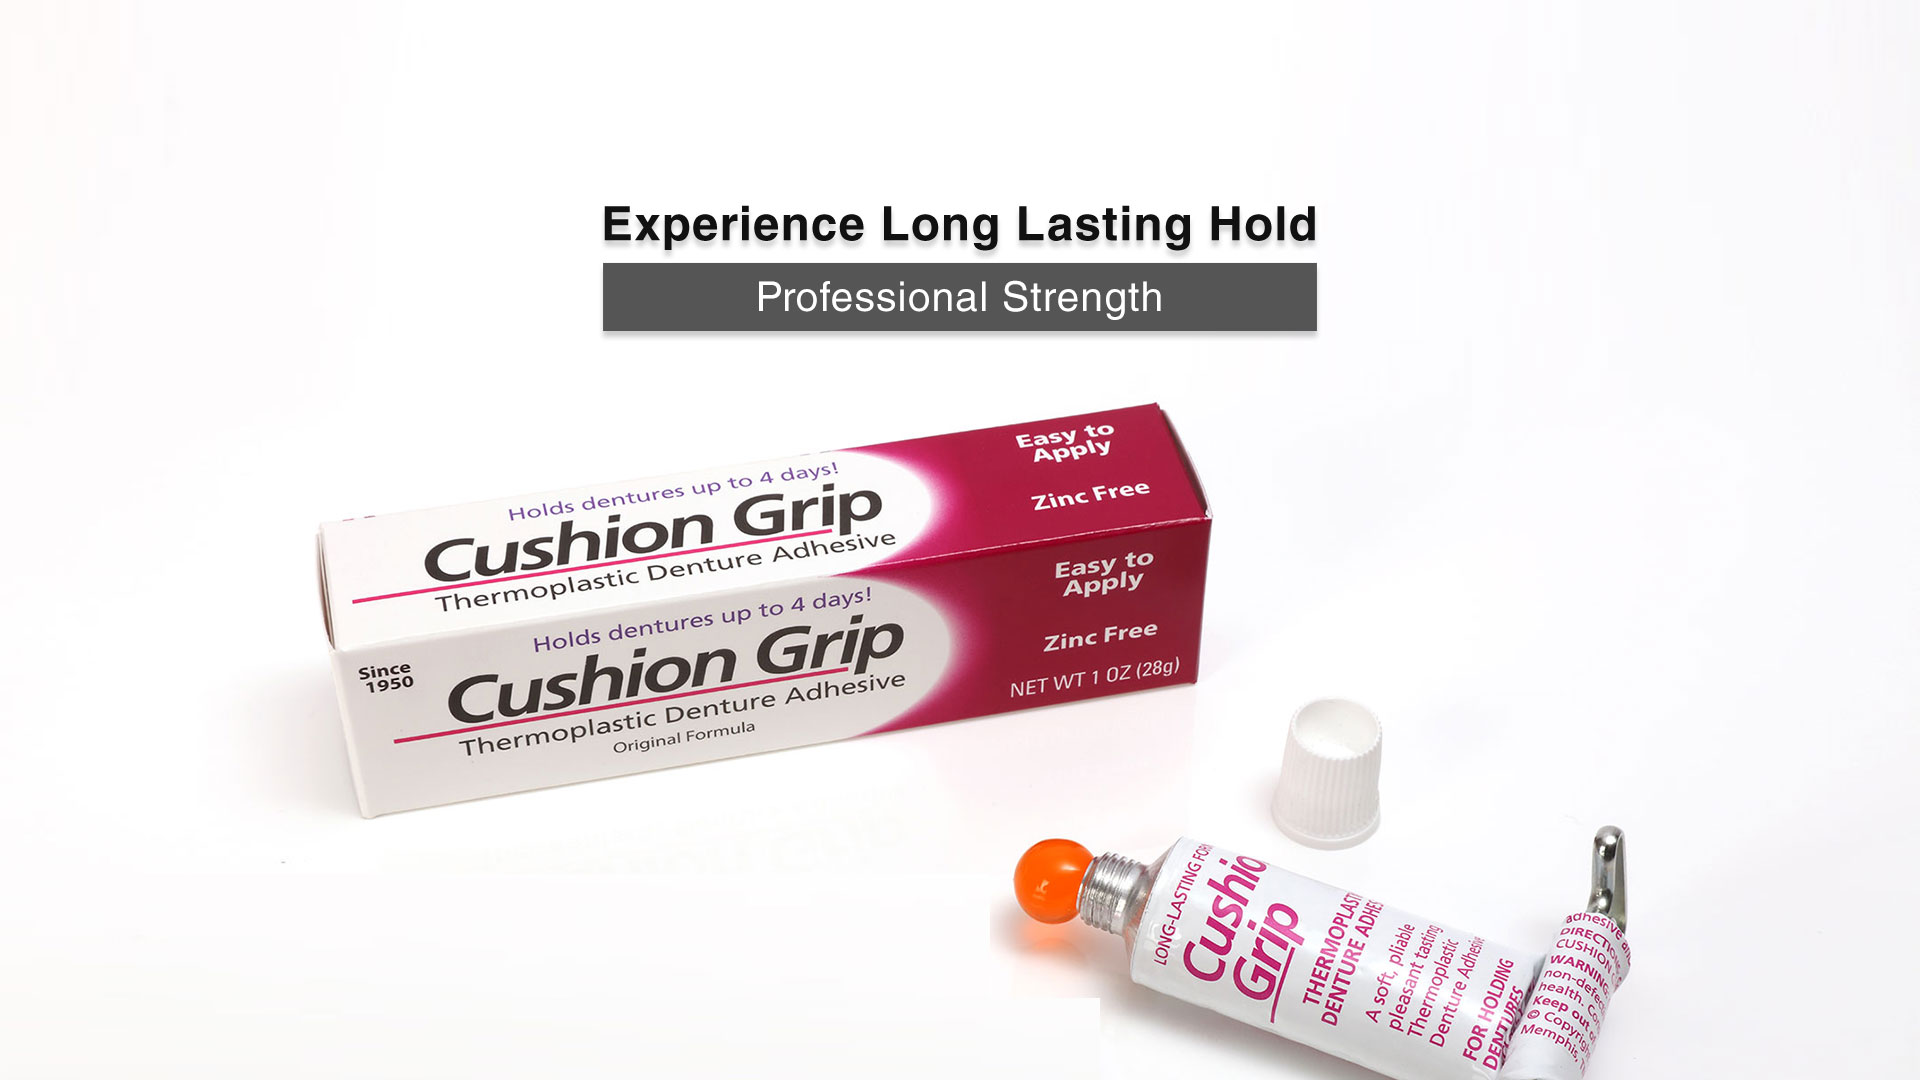 Cushion Grip Thermoplastic Denture Adhesive, Zinc Free, 1 oz Pack